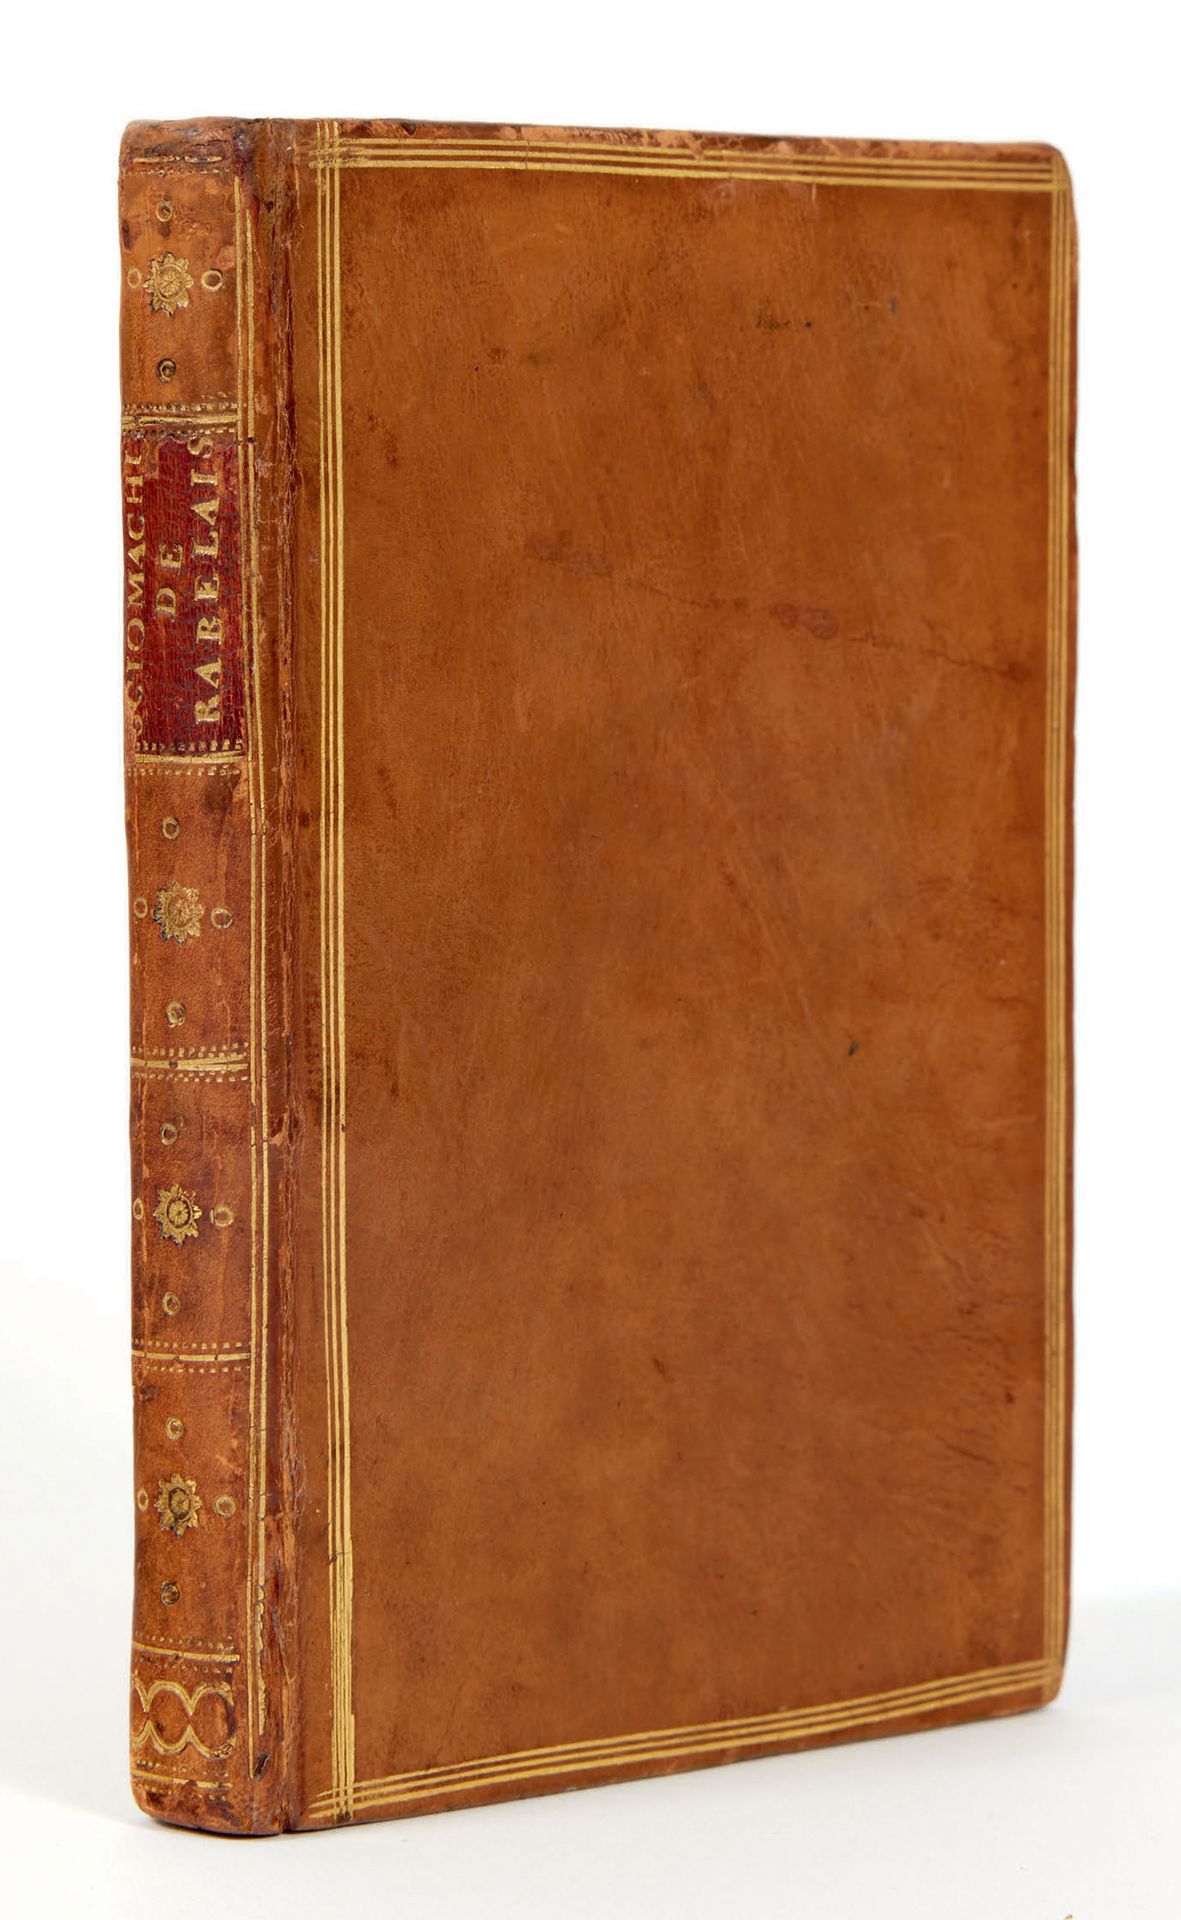 RABELAIS, François 在罗马举行的山地人和宴会
里昂，塞巴斯蒂安-格里夫[ius]，1549年
为德拉瓦利埃公爵装订的极好的副本，为他装订。
本&hellip;